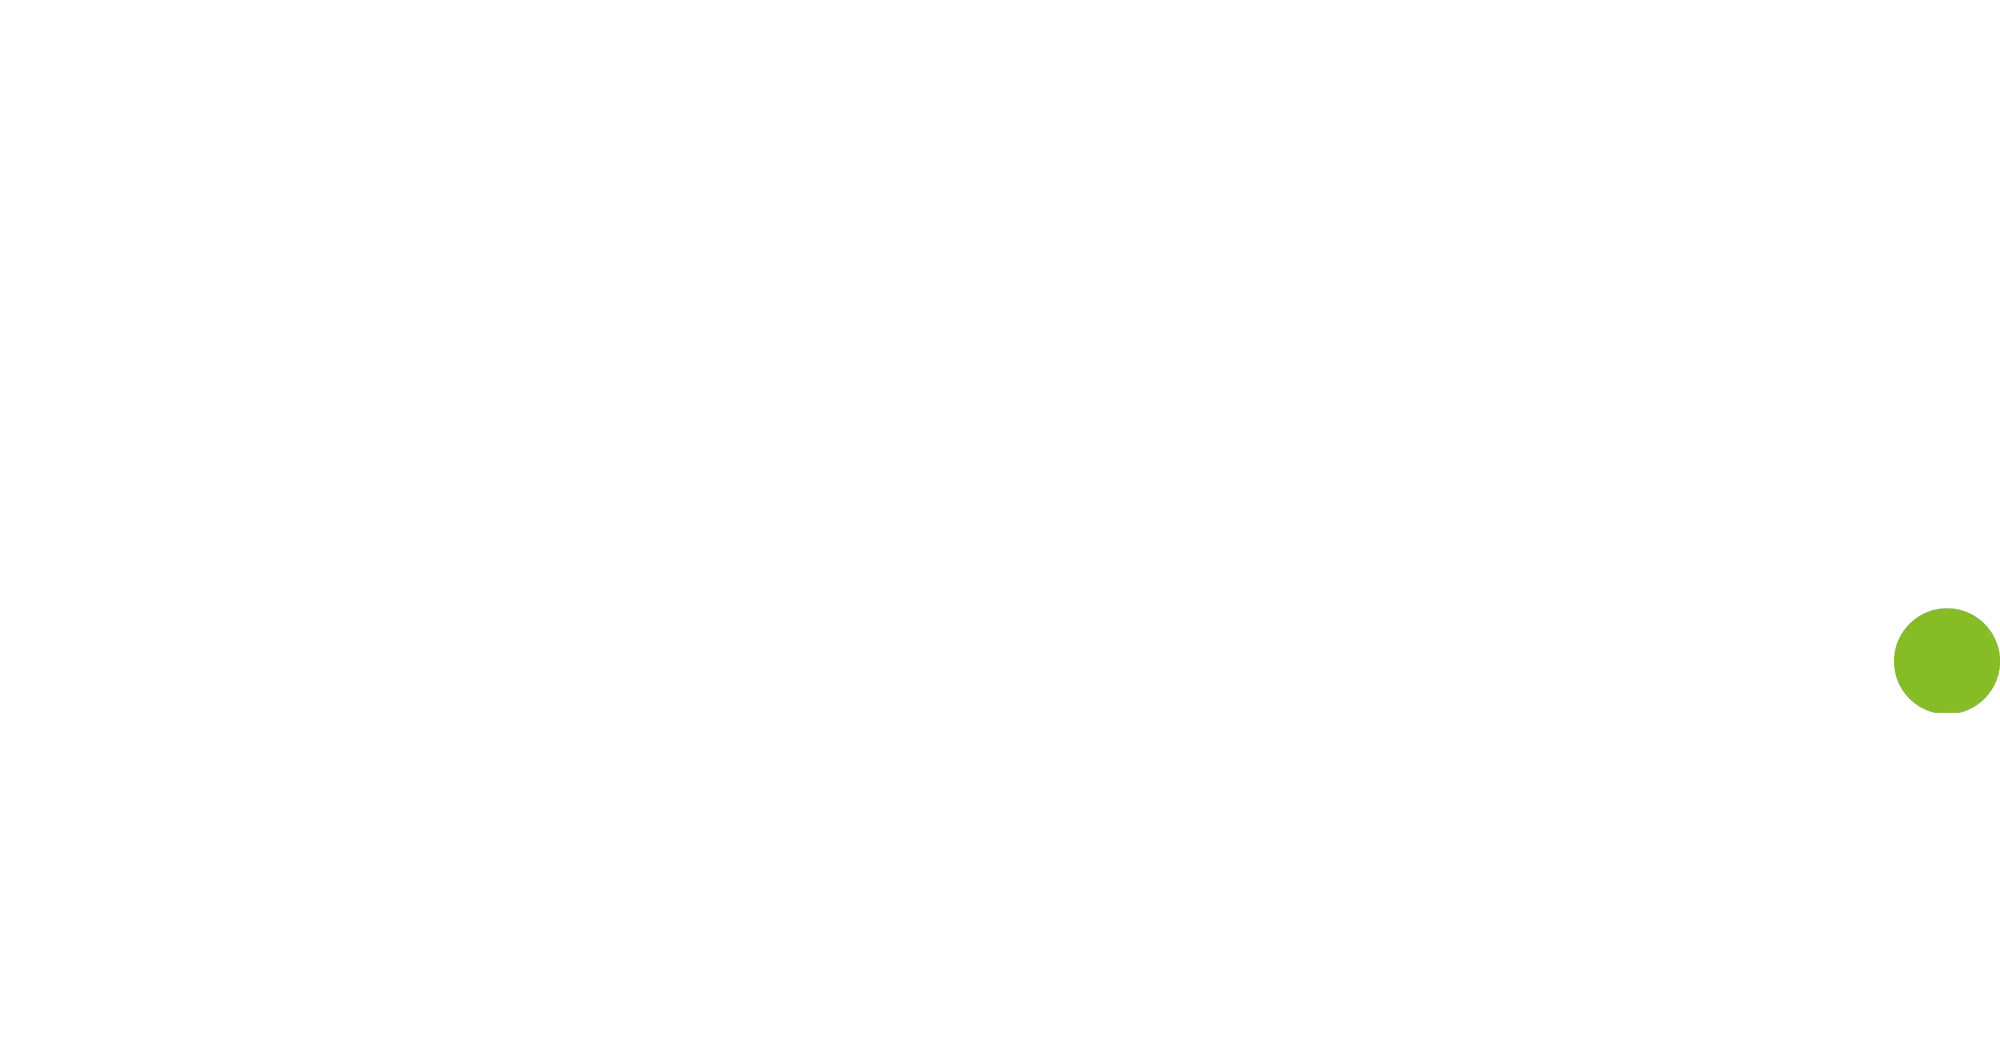 Deloitte - Logo Transparent White